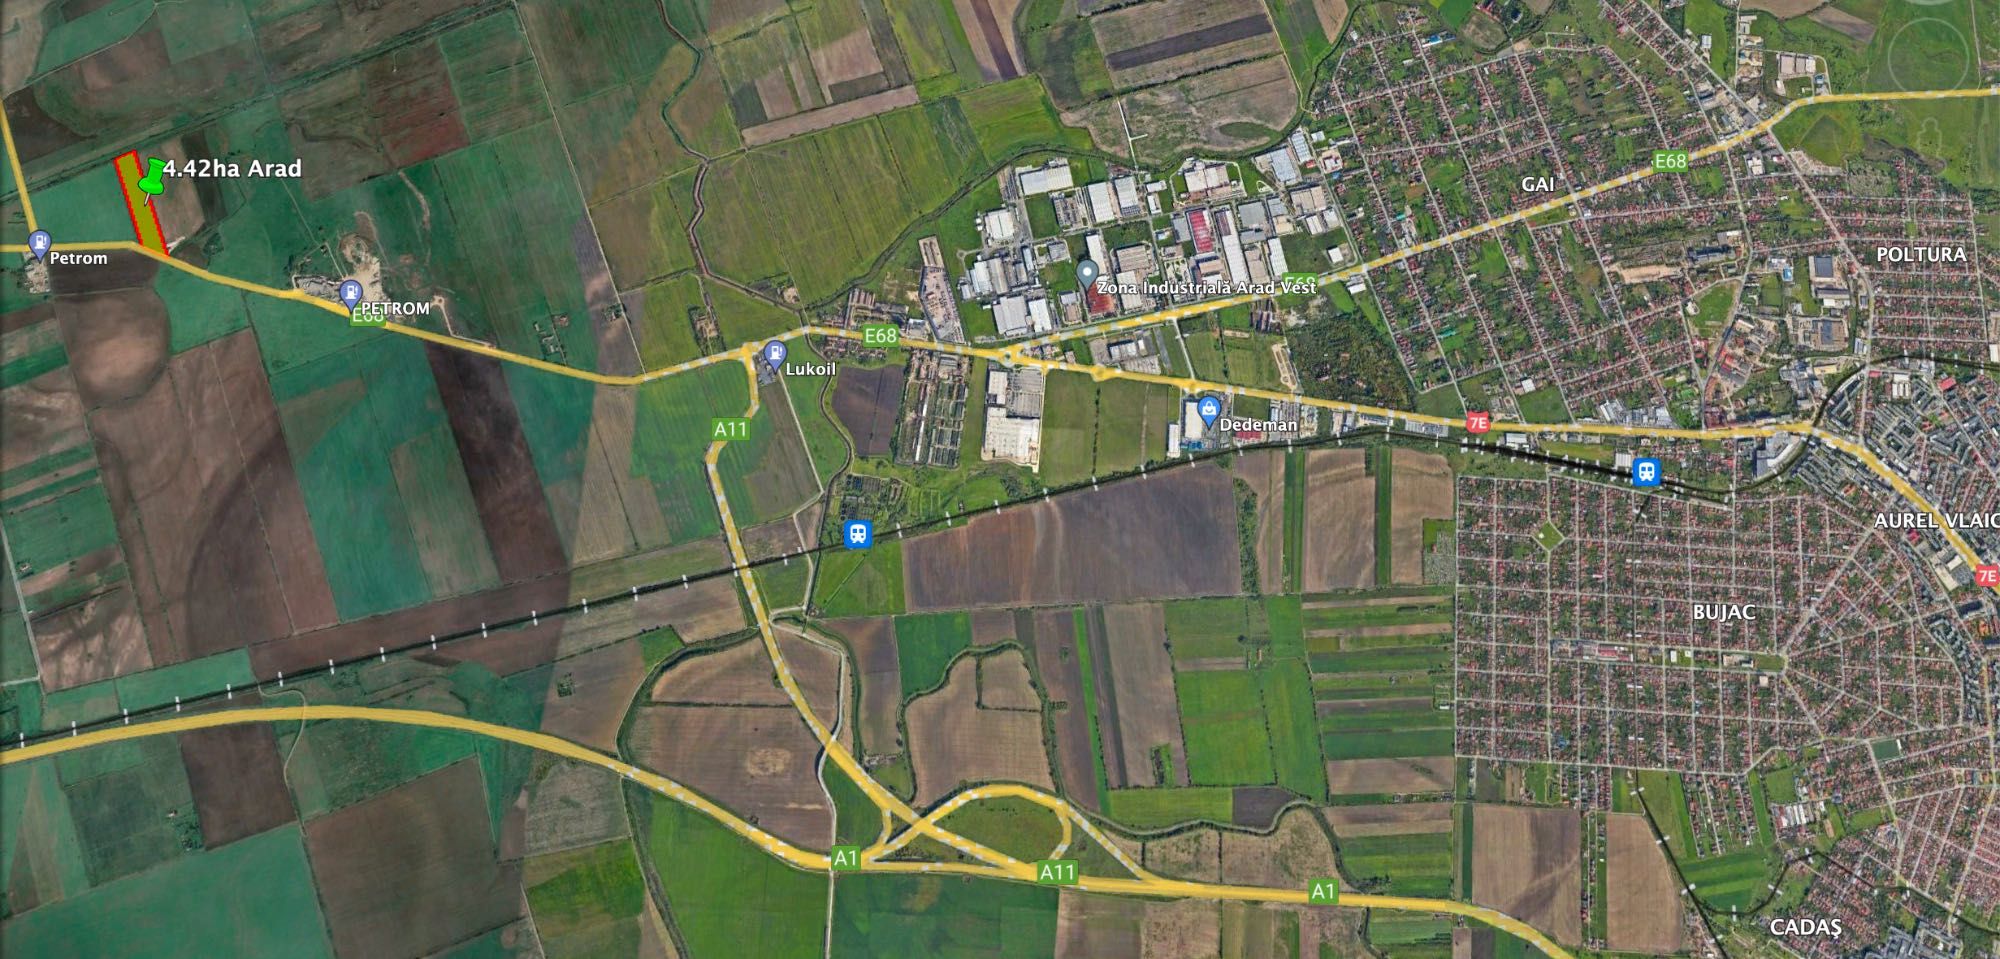 OCAZIE!44.200mp Arad industrial deschidere 130m DN7 langa nod rutier